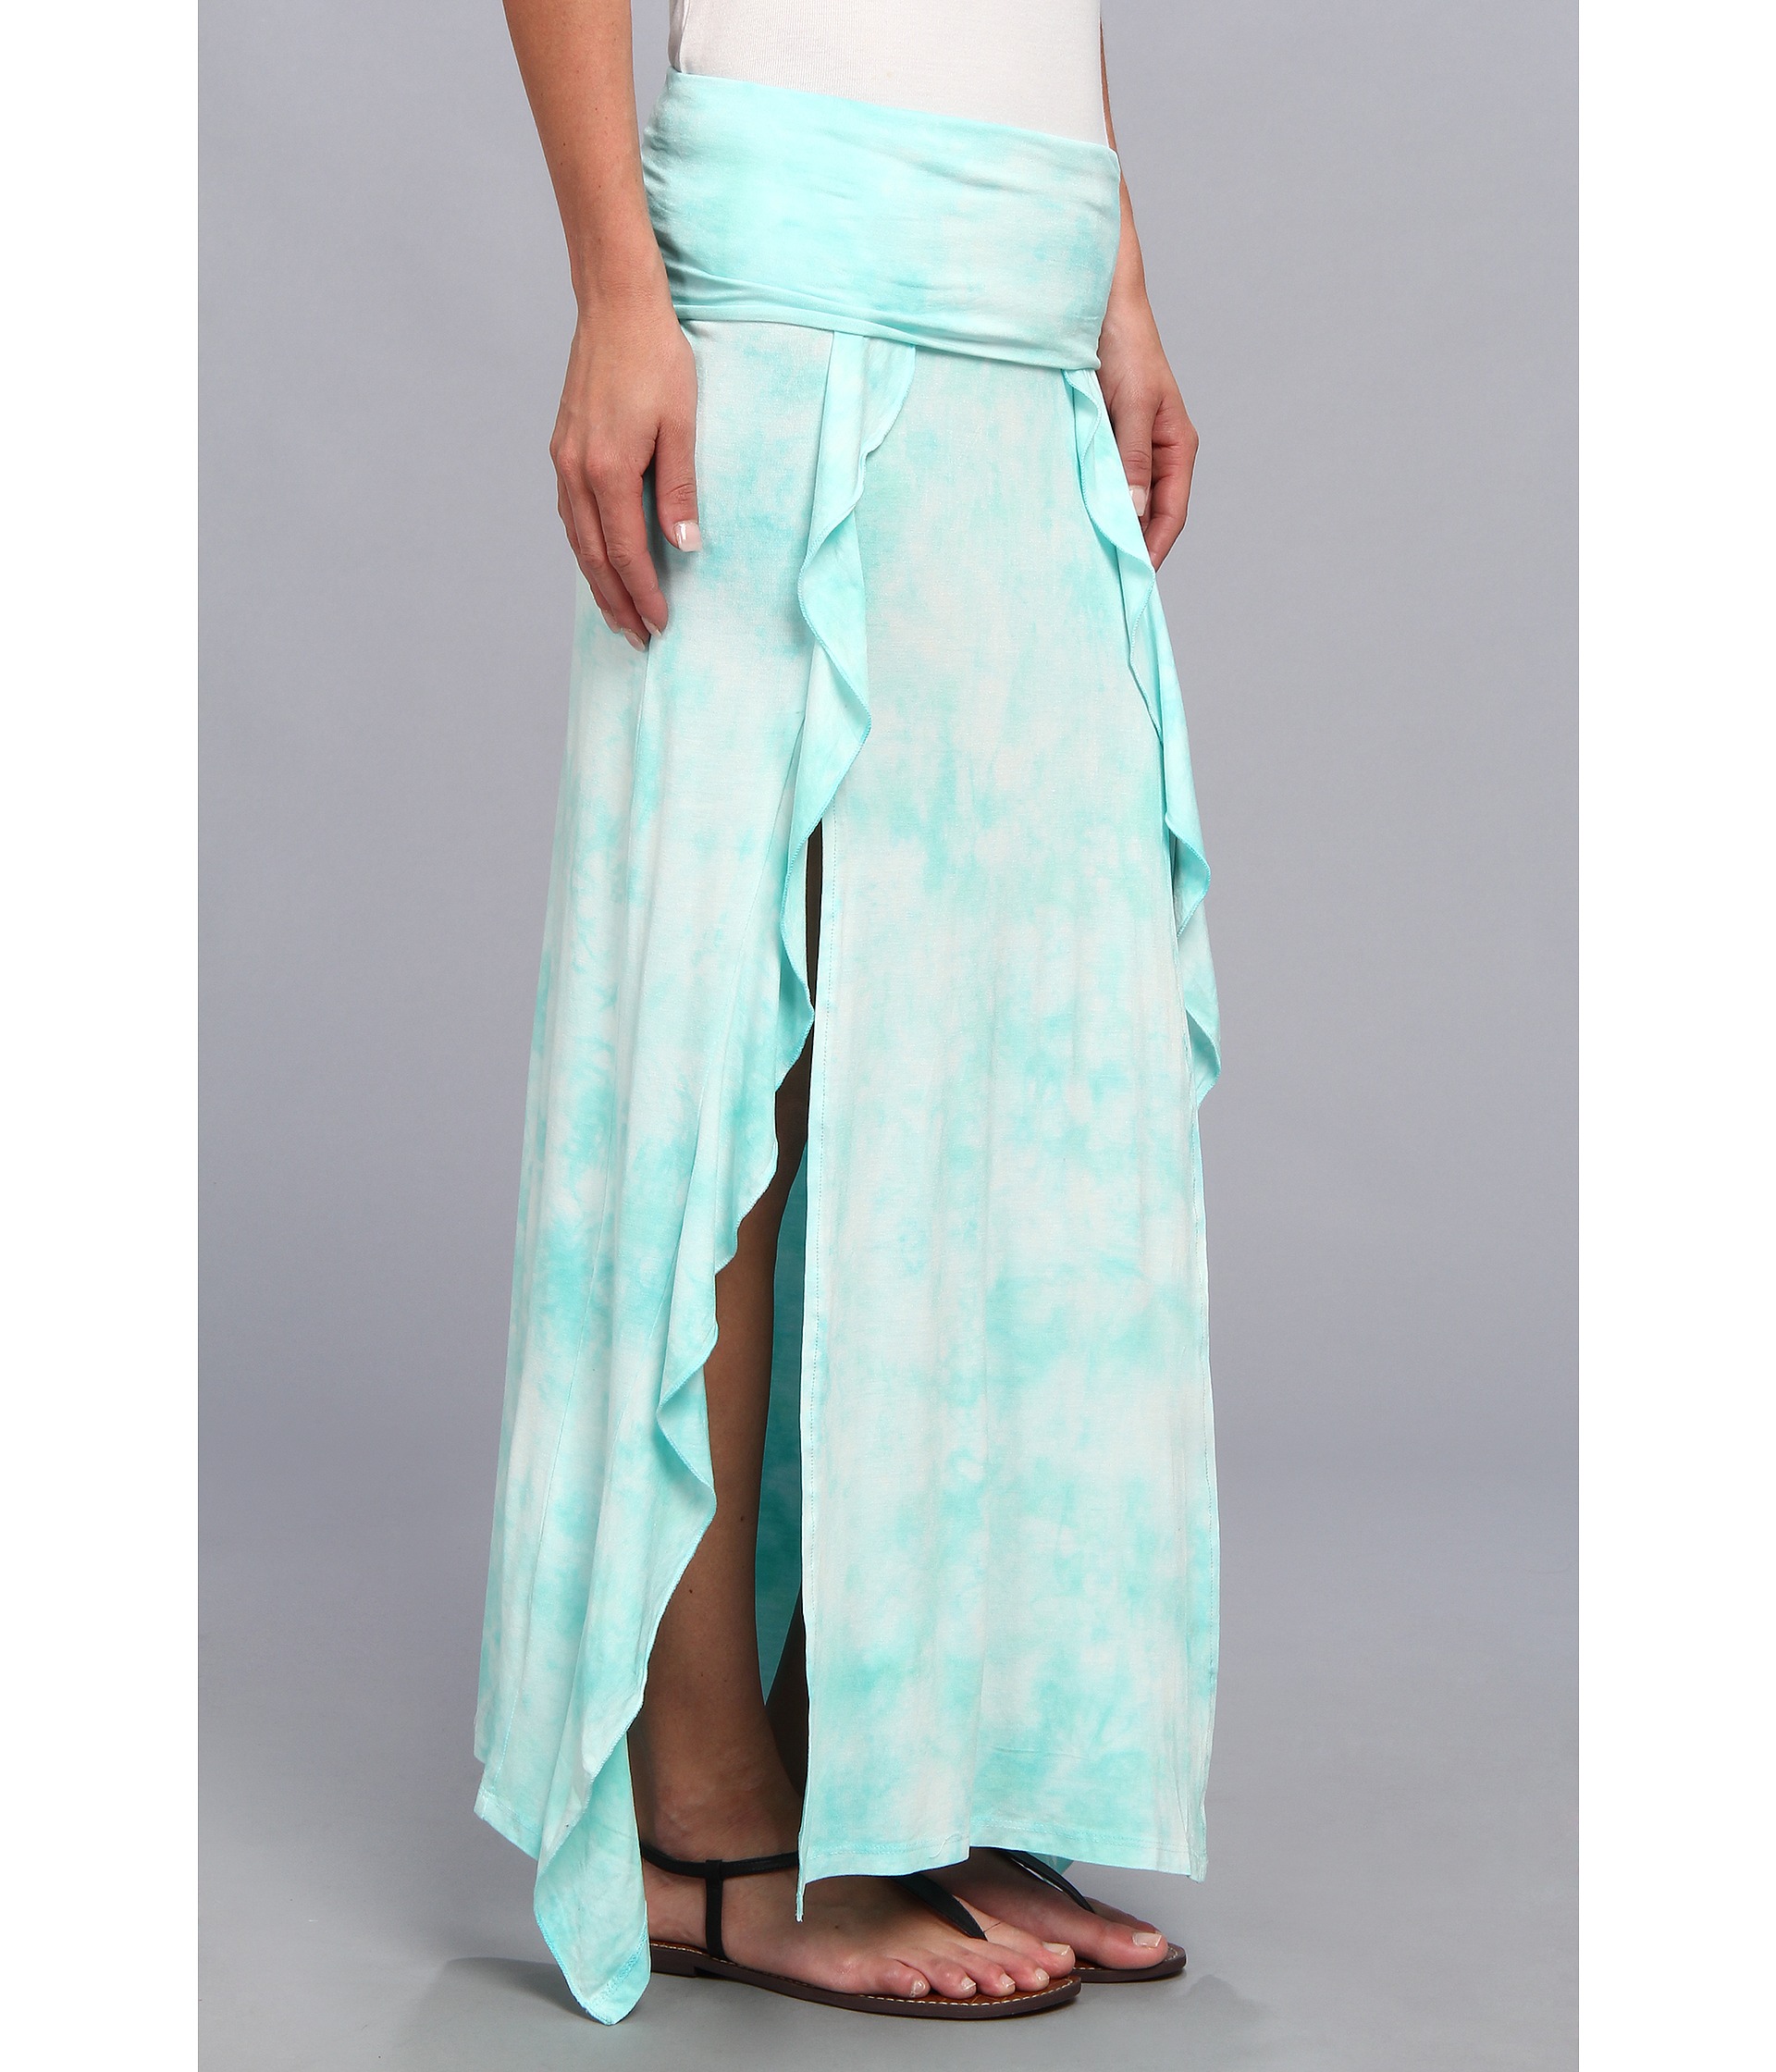 Rip Curl Sunland Maxi Skirt Aqua, Clothing, Women | Shipped Free at Zappos